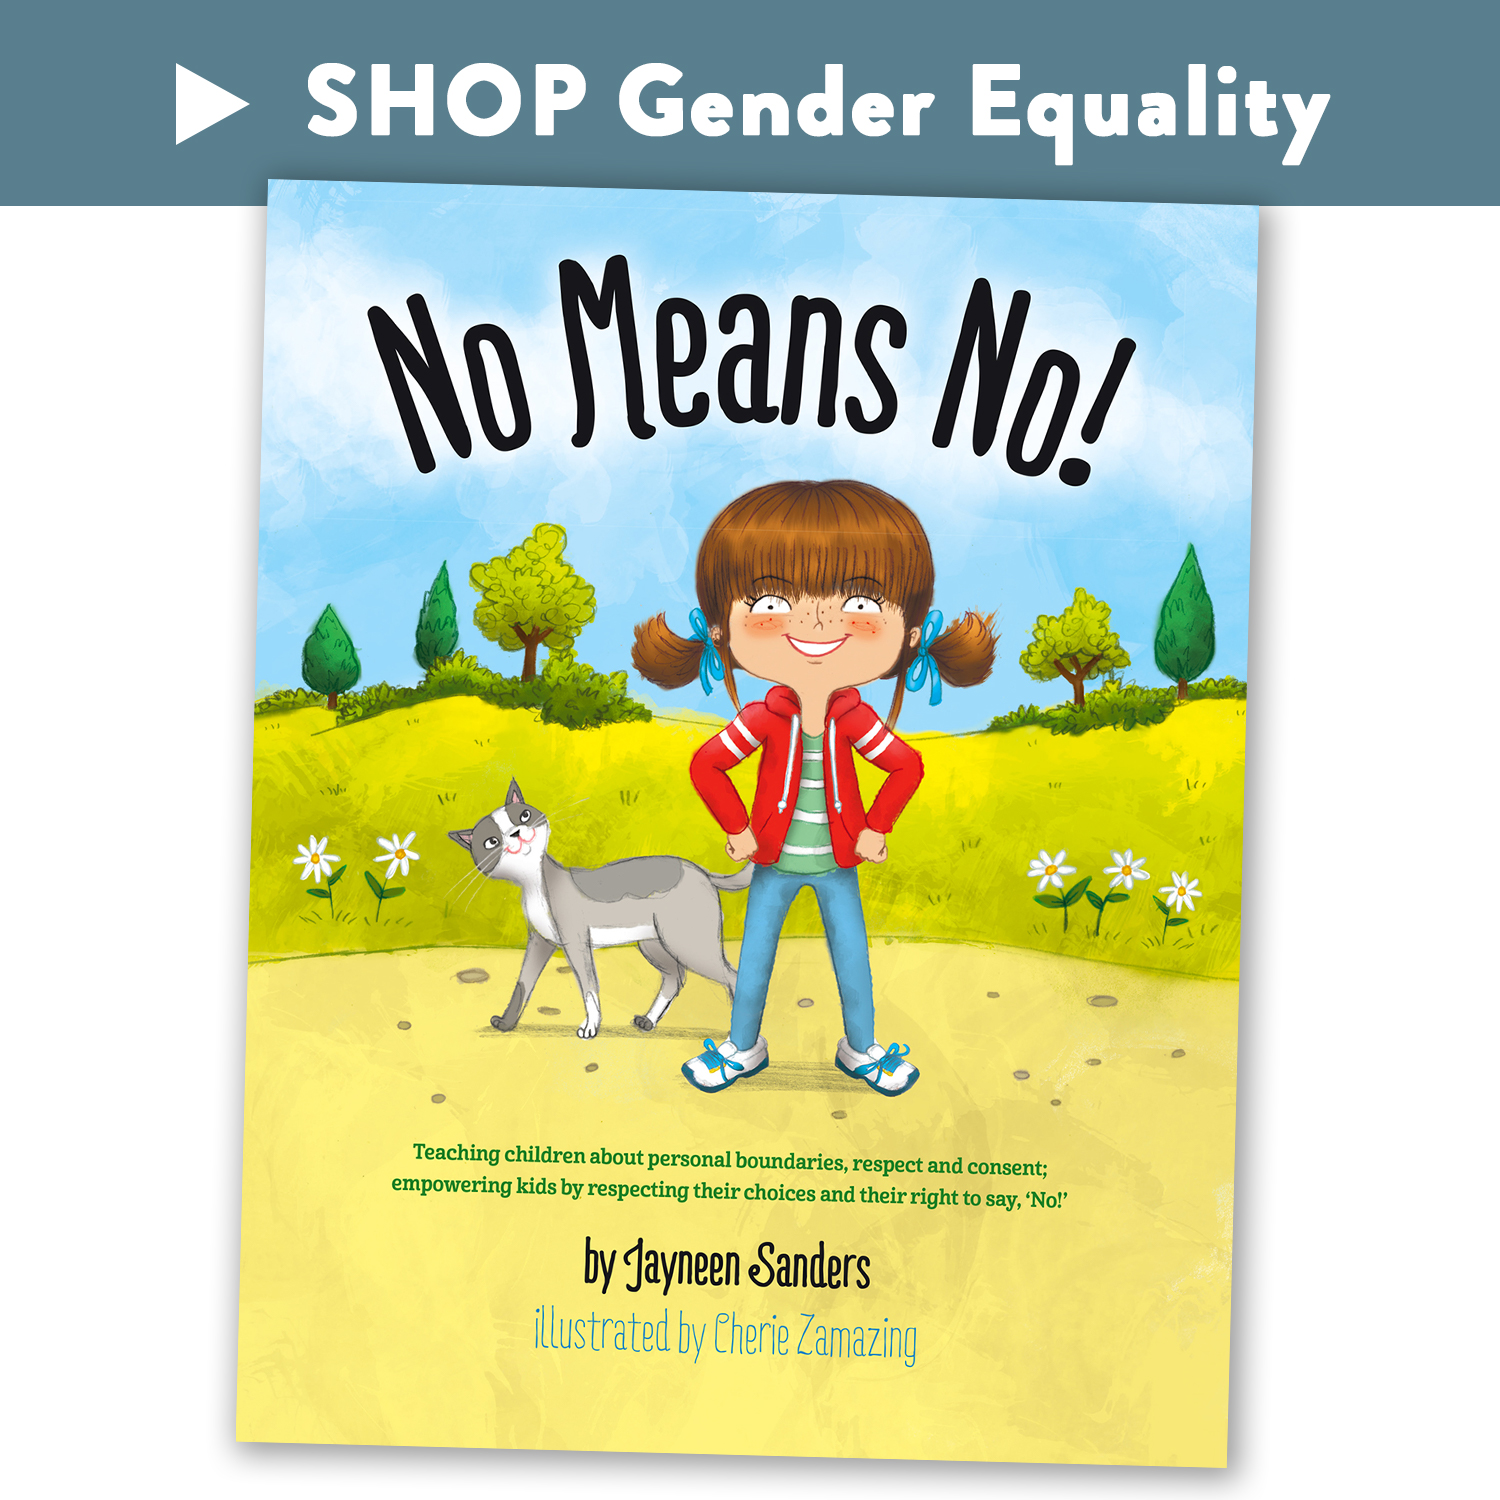 E2E_shop_GenderEquality_5-NMN.jpg